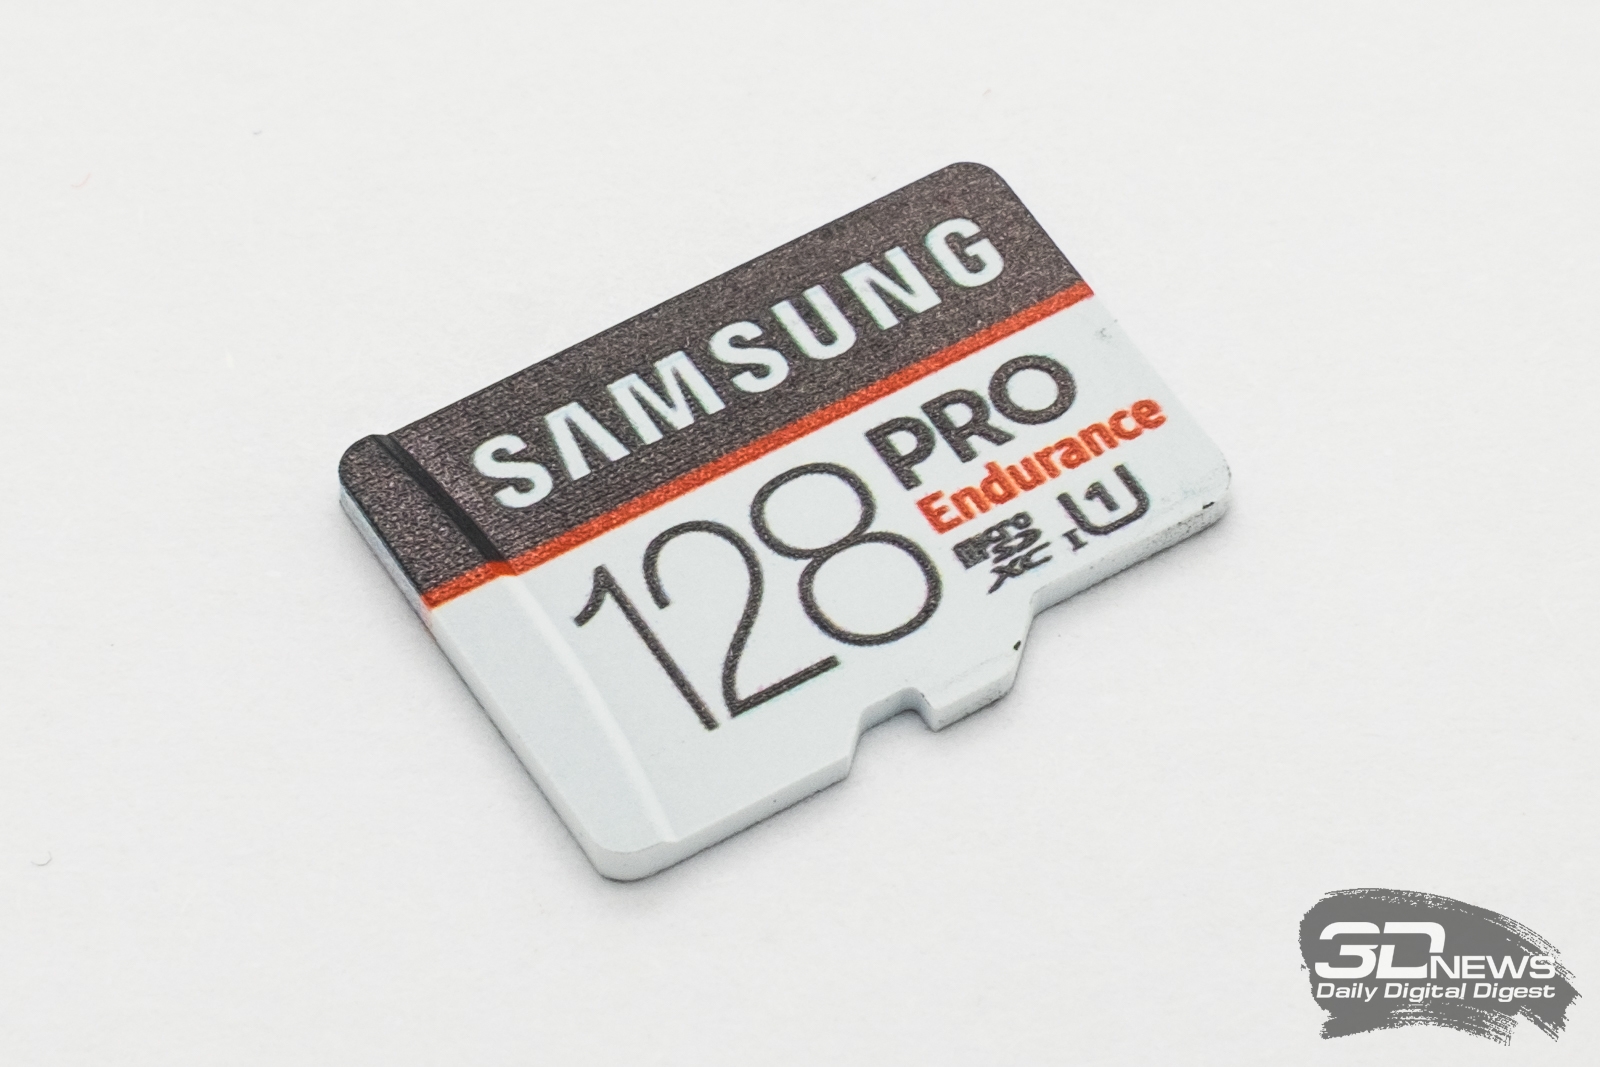 Microsdxc samsung 128gb. Samsung EVO Pro MICROSD. СД карта на 128 ГБ. Флэш карты тест. Тест скорости SD карты 128 ГБ.